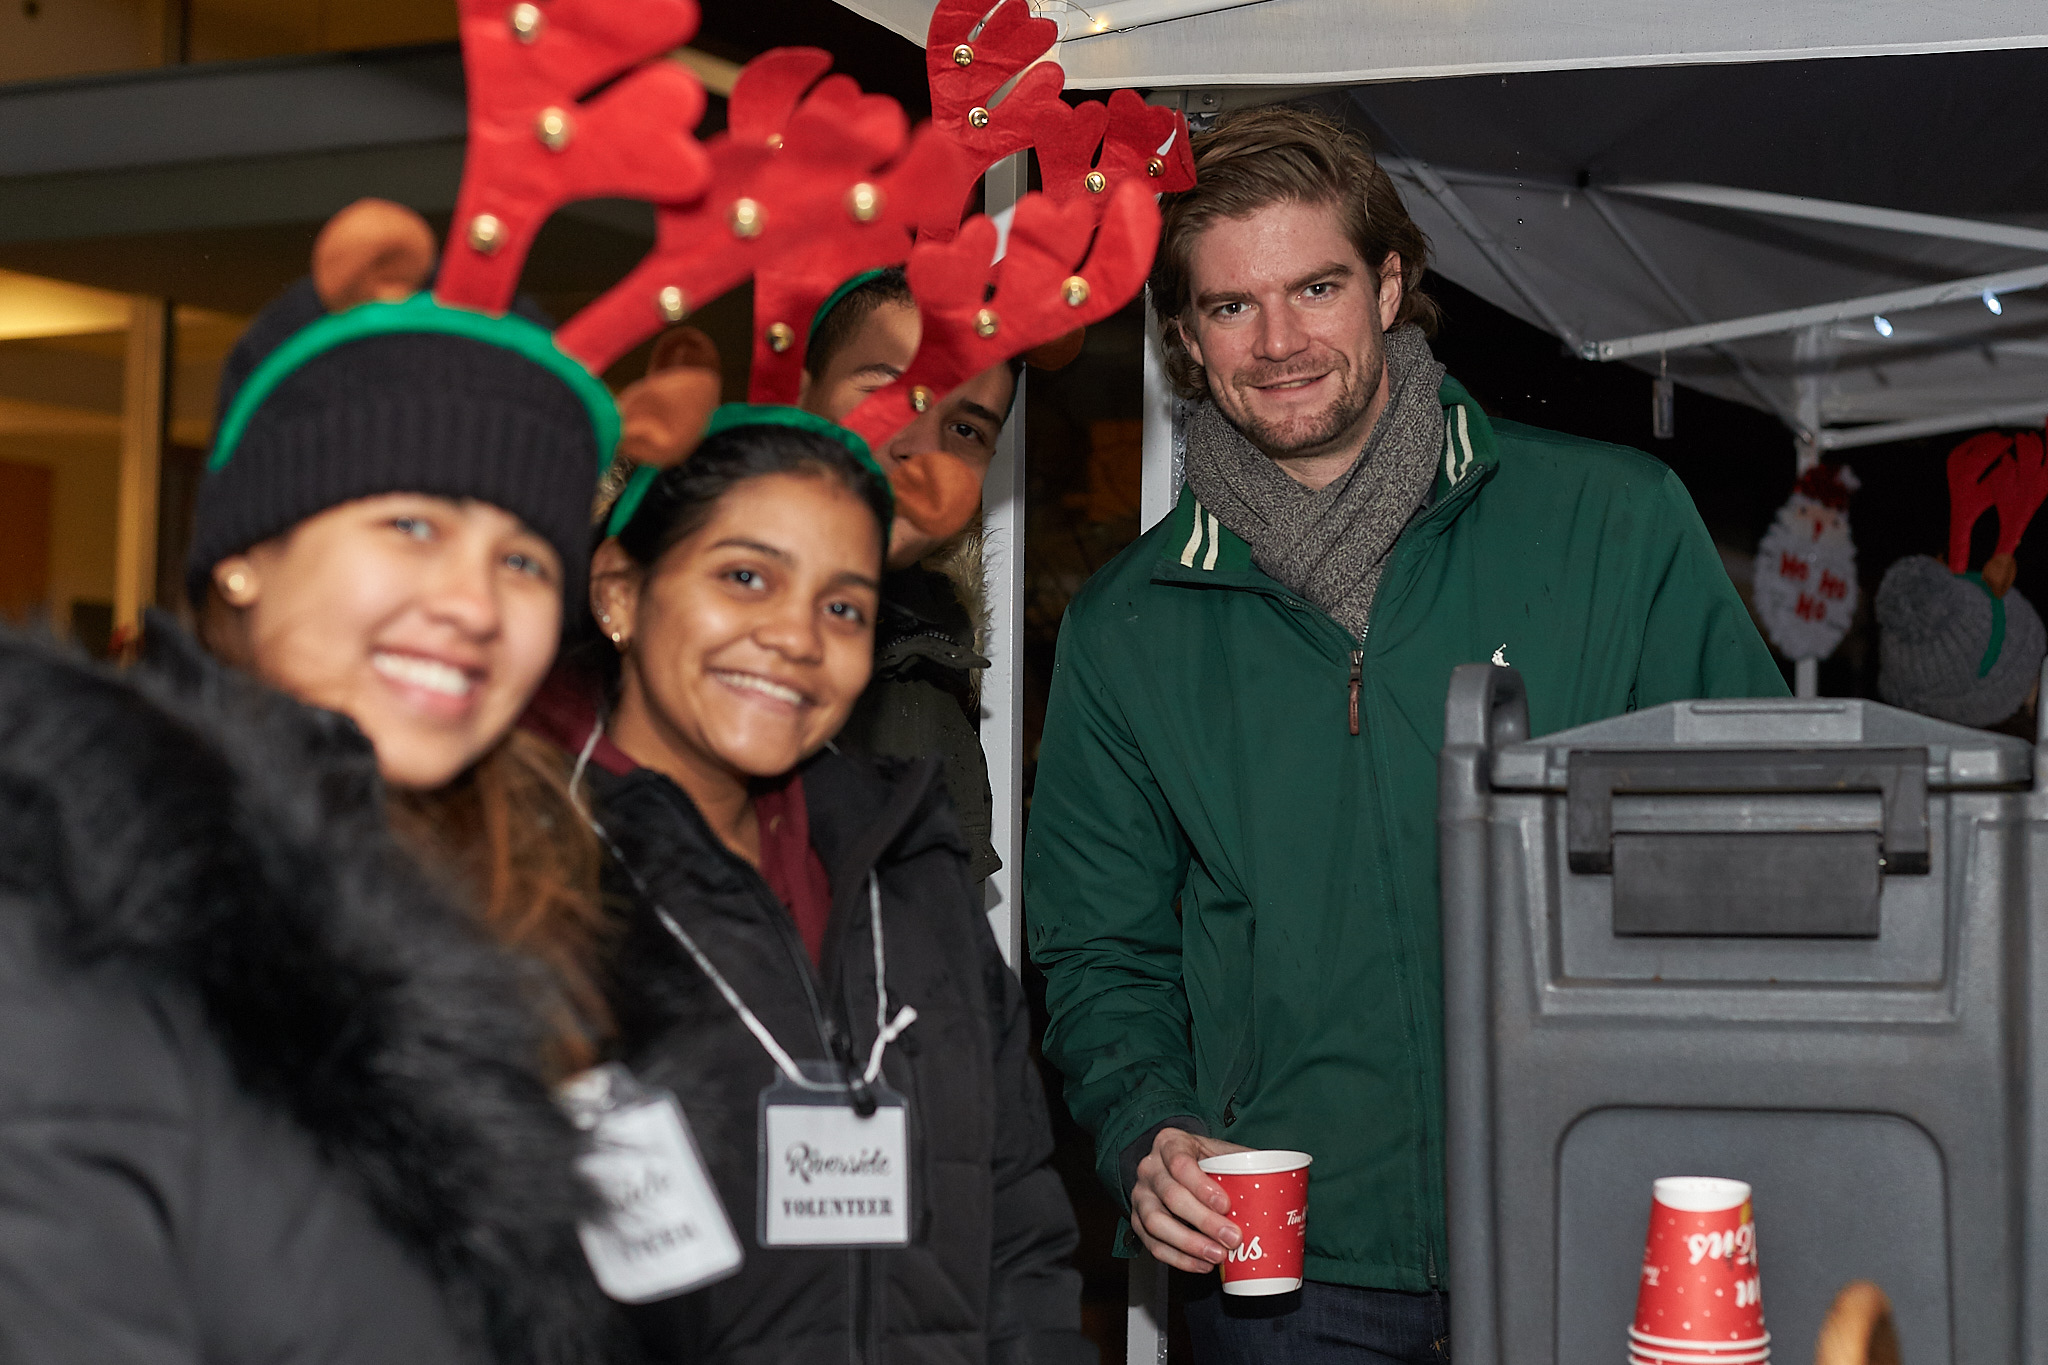 Dylan Luft of Baird MacGregor (at left) Serving up Hot Chocolate with volunteers at Light Up Riverside